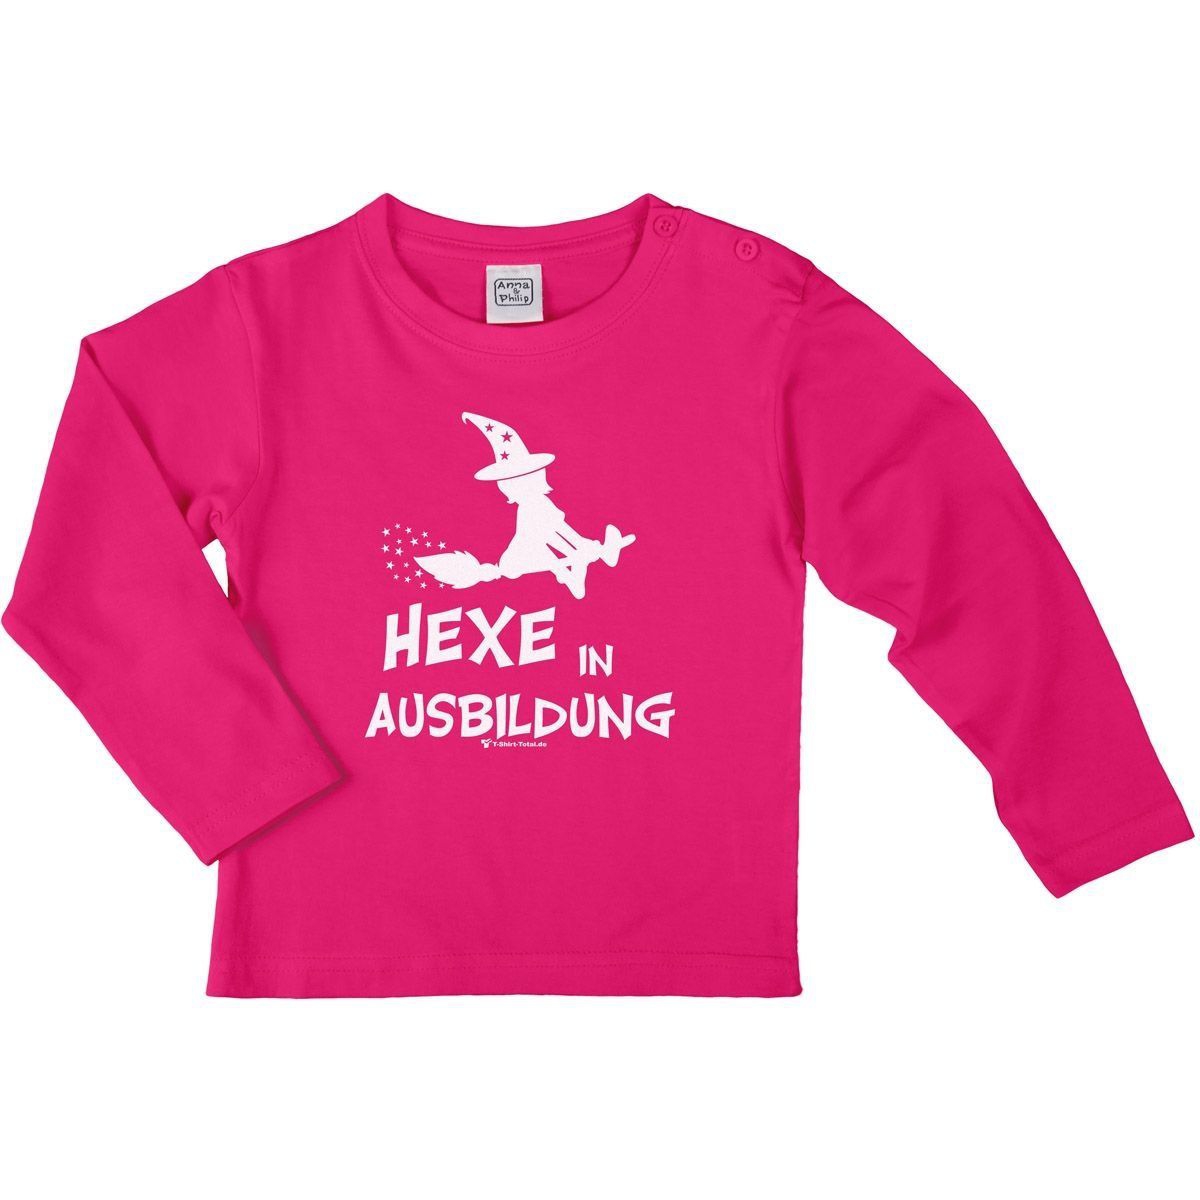 Hexe in Ausbildung Kinder Langarm Shirt pink 110 / 116